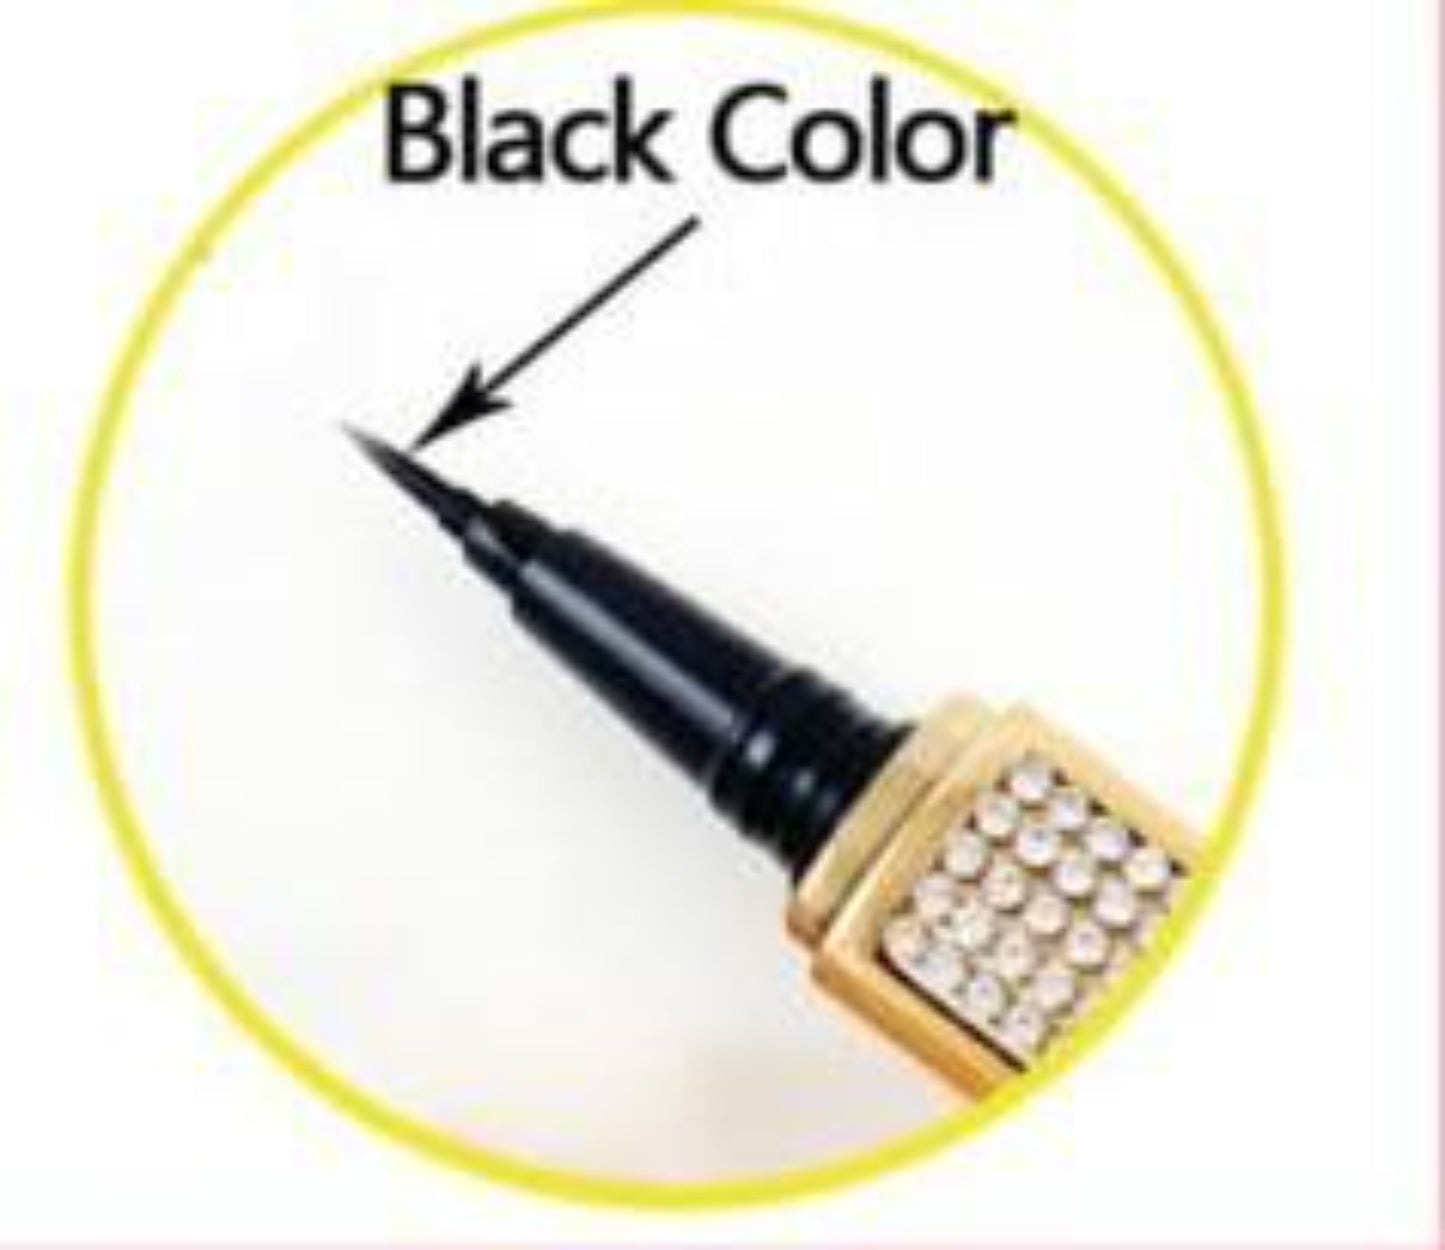 Gold Eyelash adhesive/ eyeliner pen